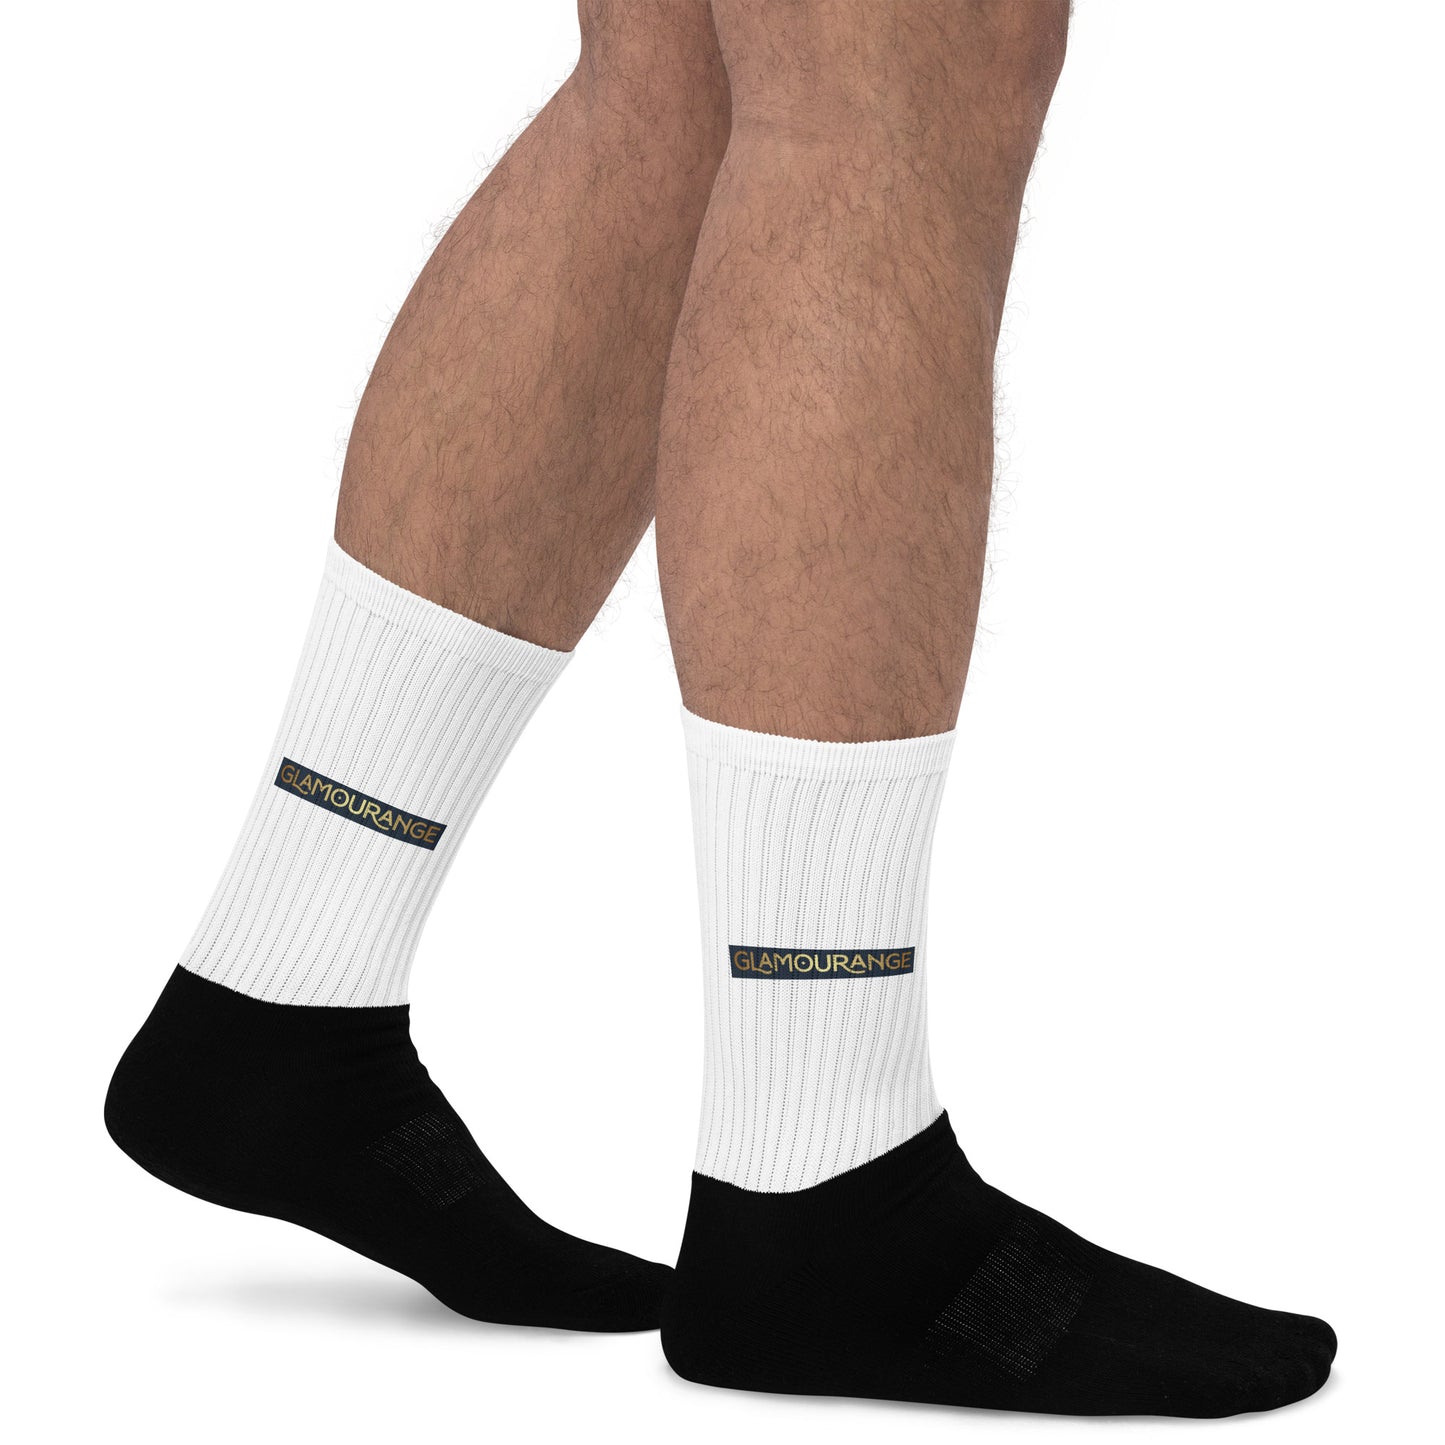 Socks (Glamourange Limited Editions Socks - Model 001)